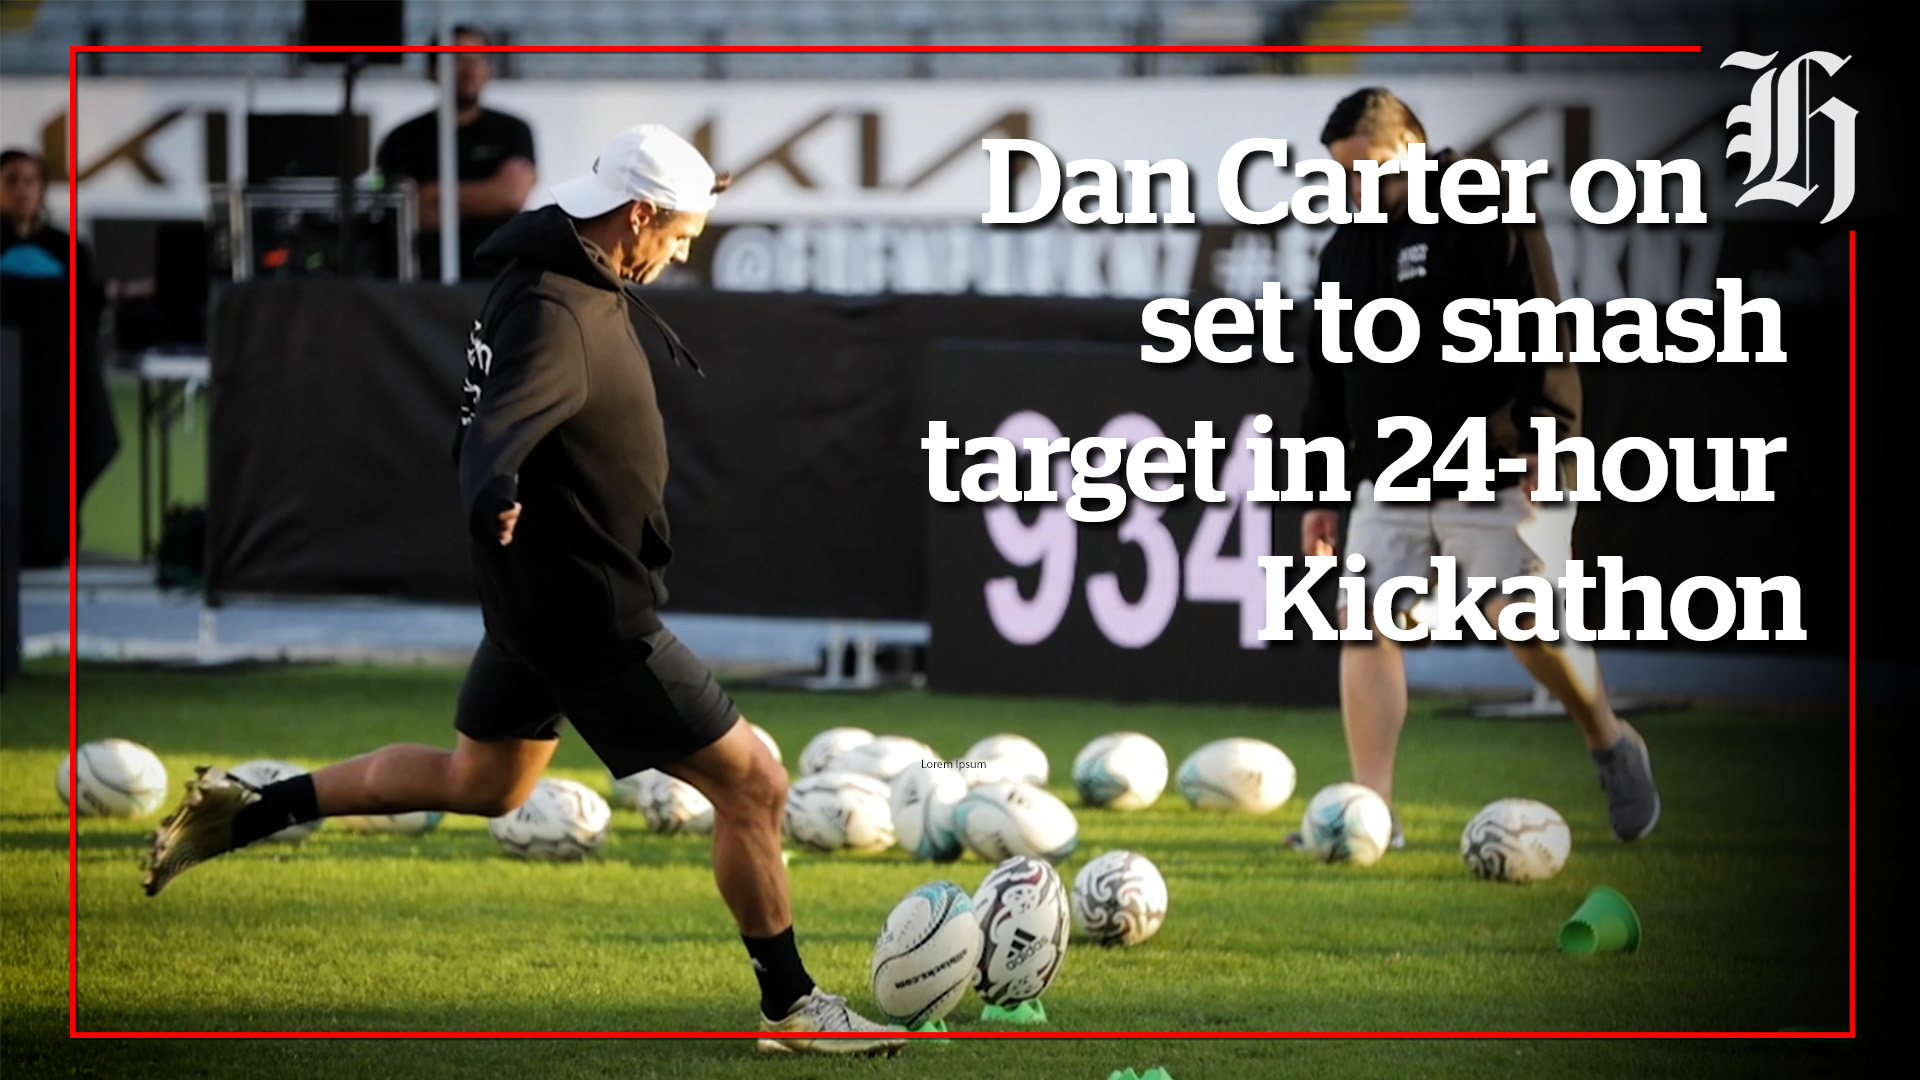 He's done it! Former All Black Dan Carter kicks 1598 goals in 24